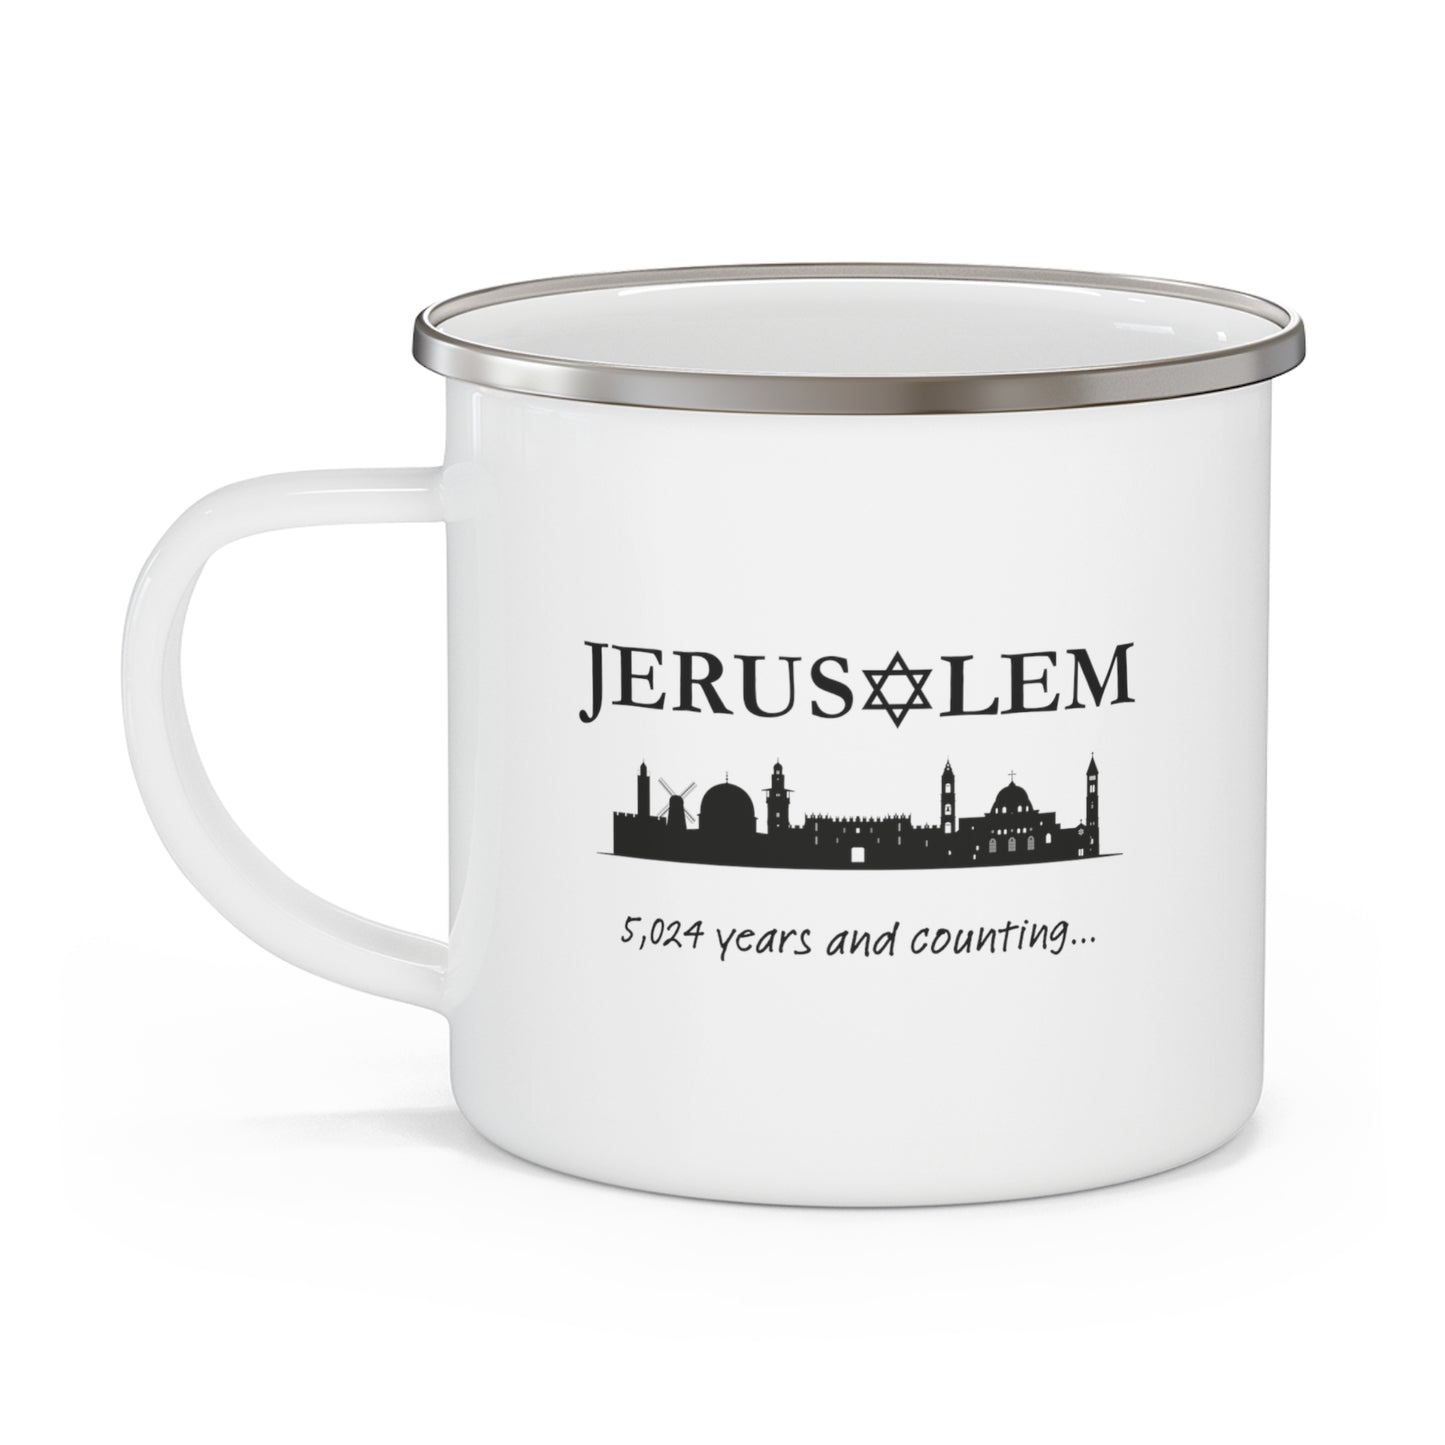 Jerusalem - 5,024 Years and Counting... Enamel Camping Mug